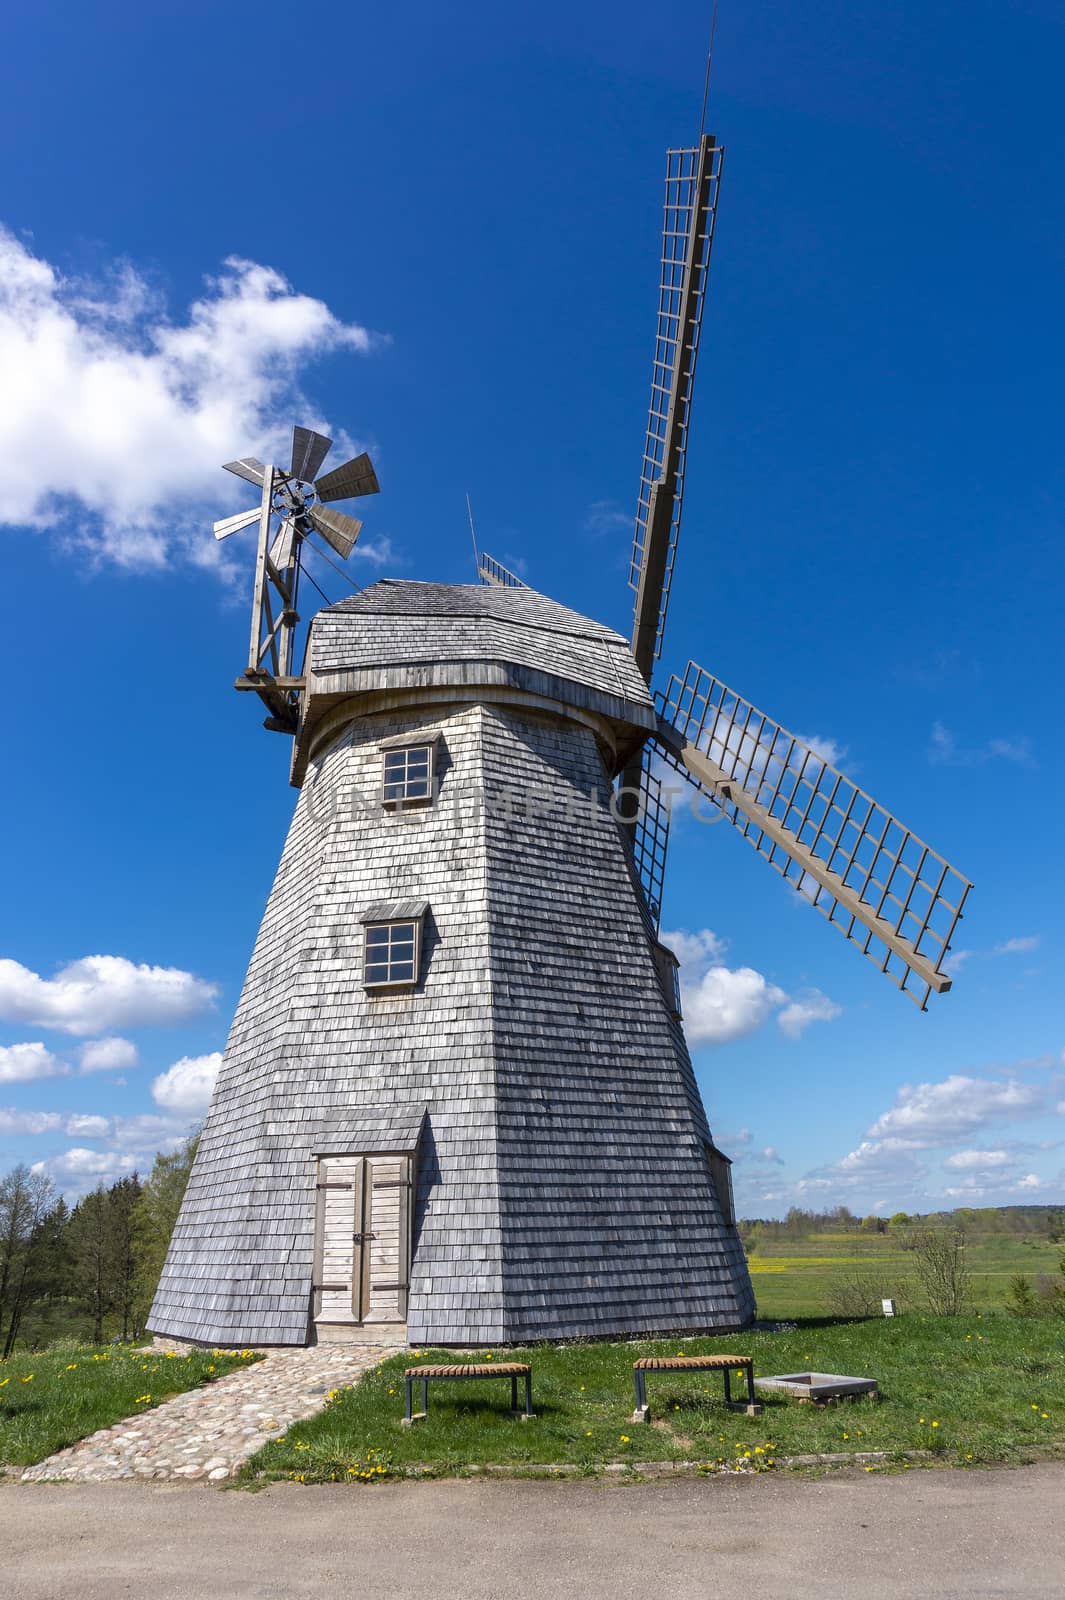 Historic windmill in a lush green field by NetPix